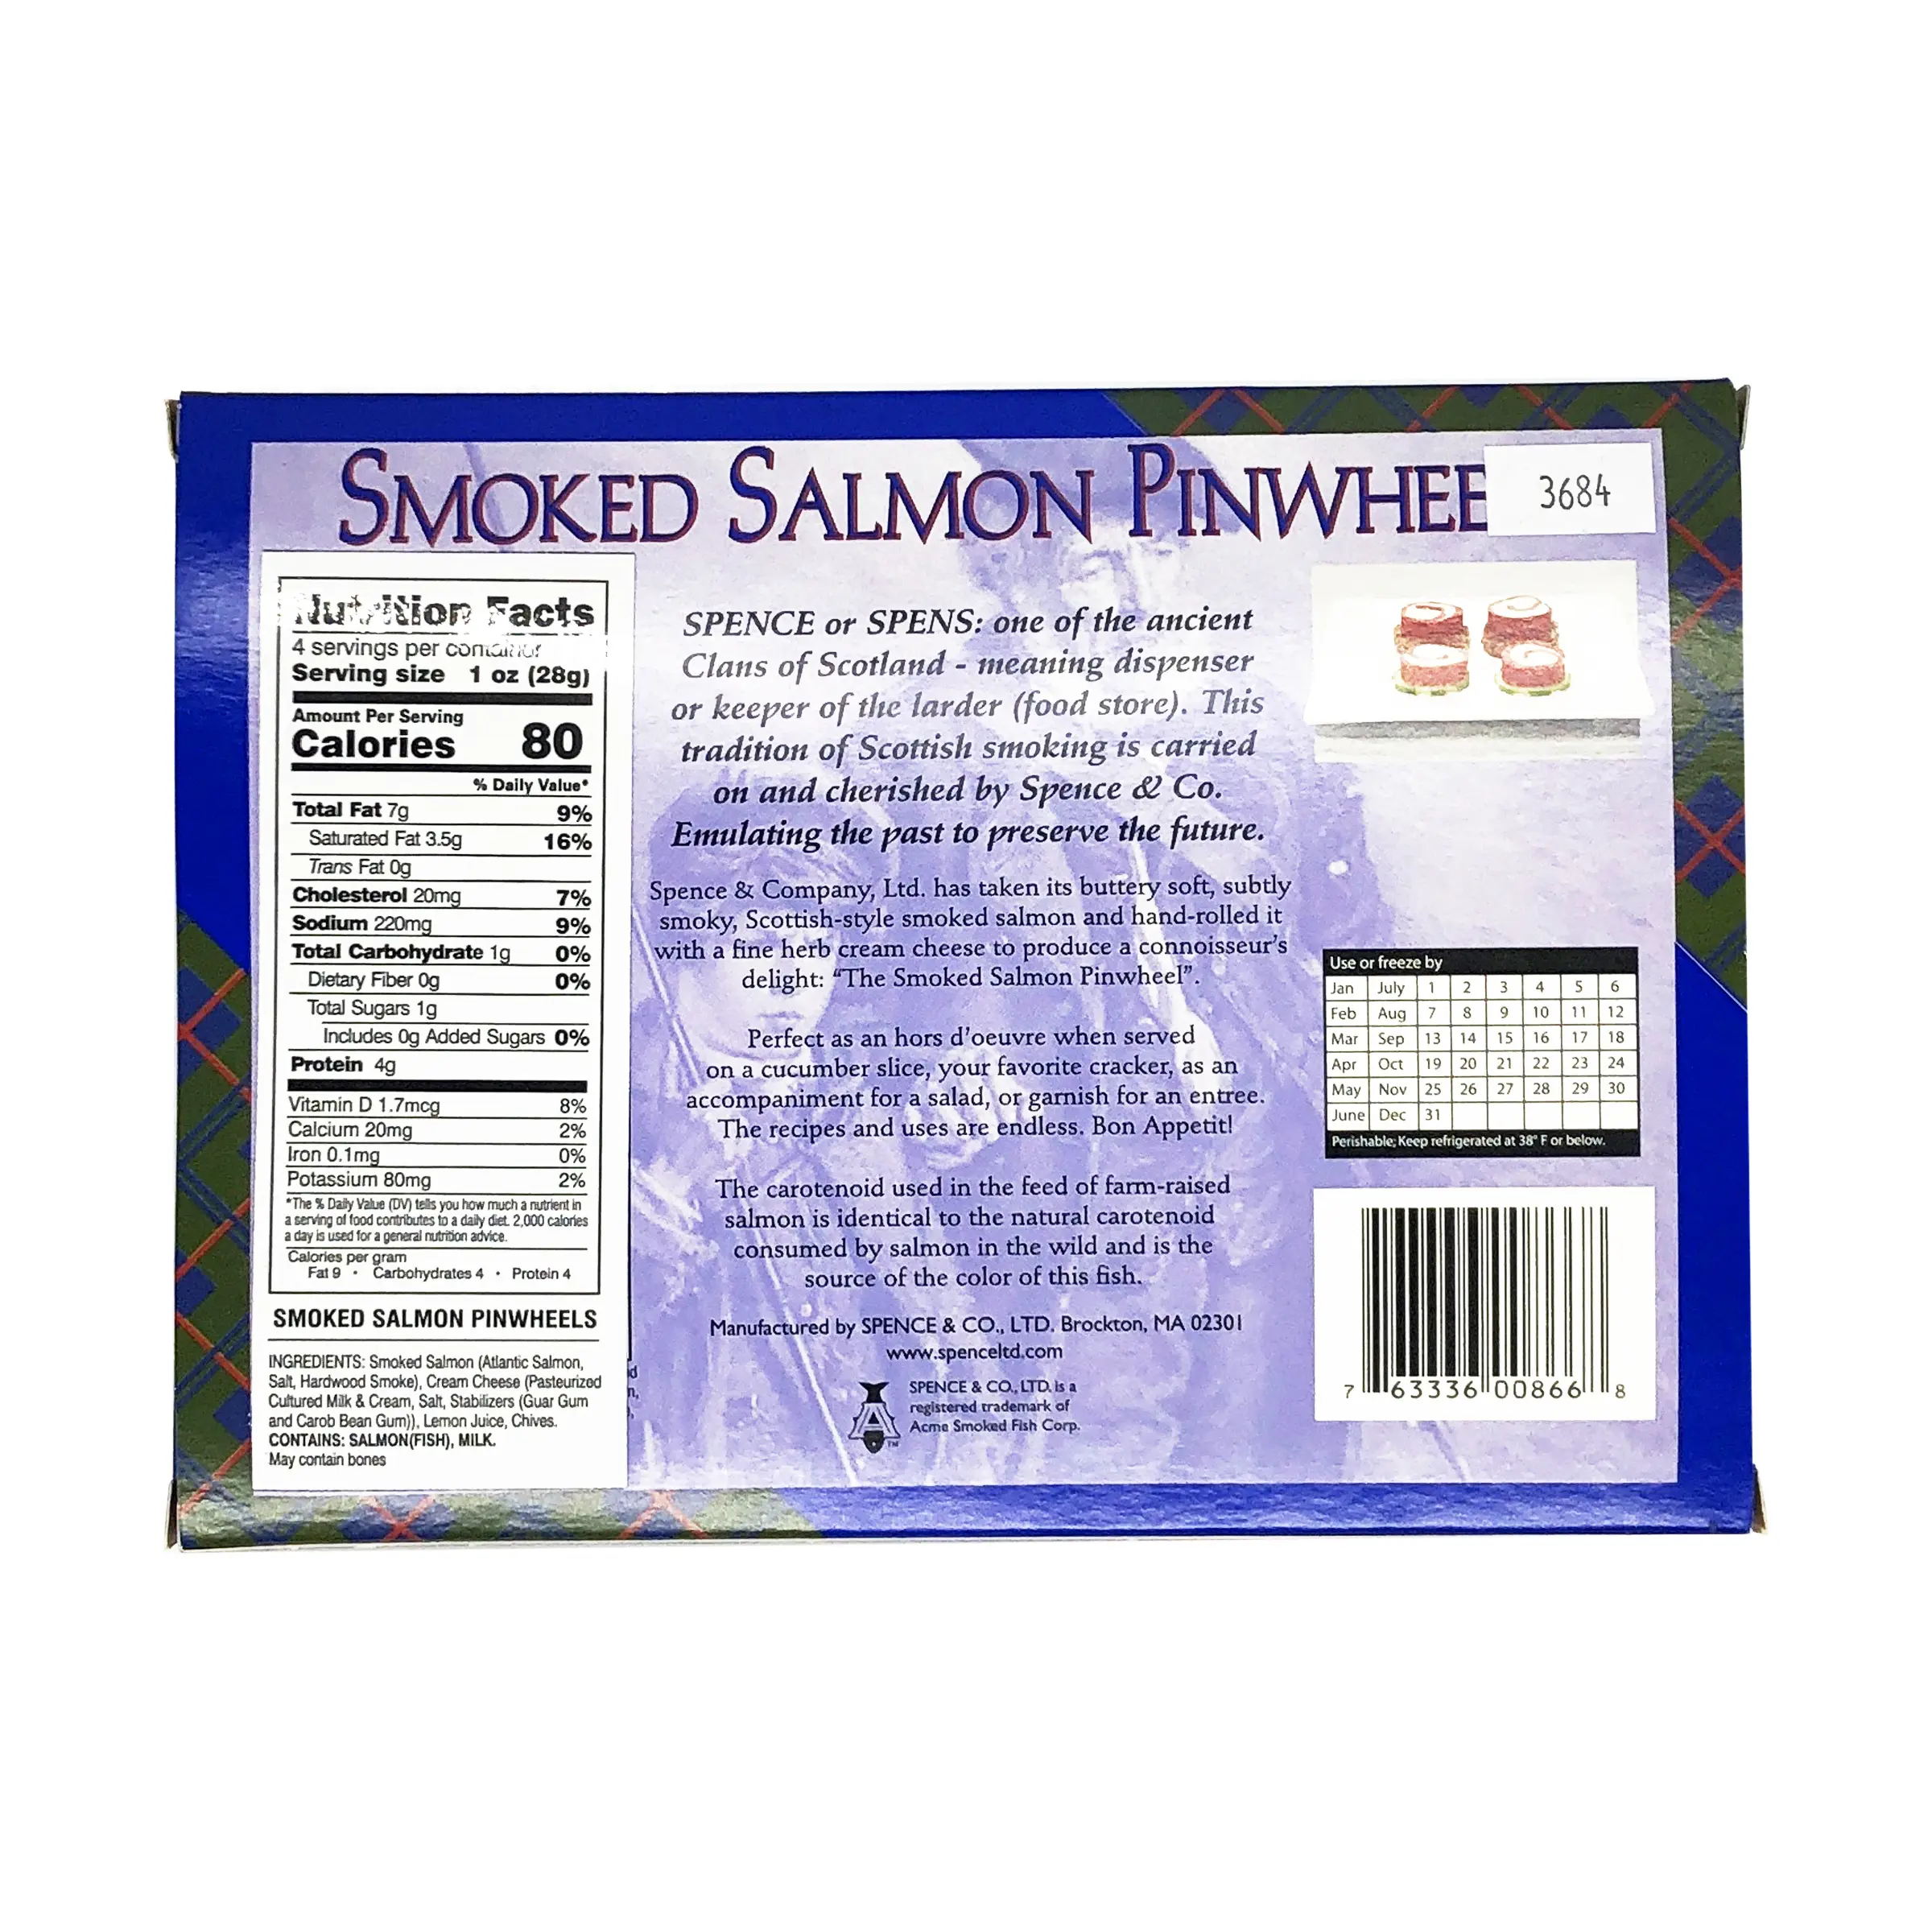 smoked salmon pinwheels whole foods - How many calories are in smoked salmon from Whole Foods